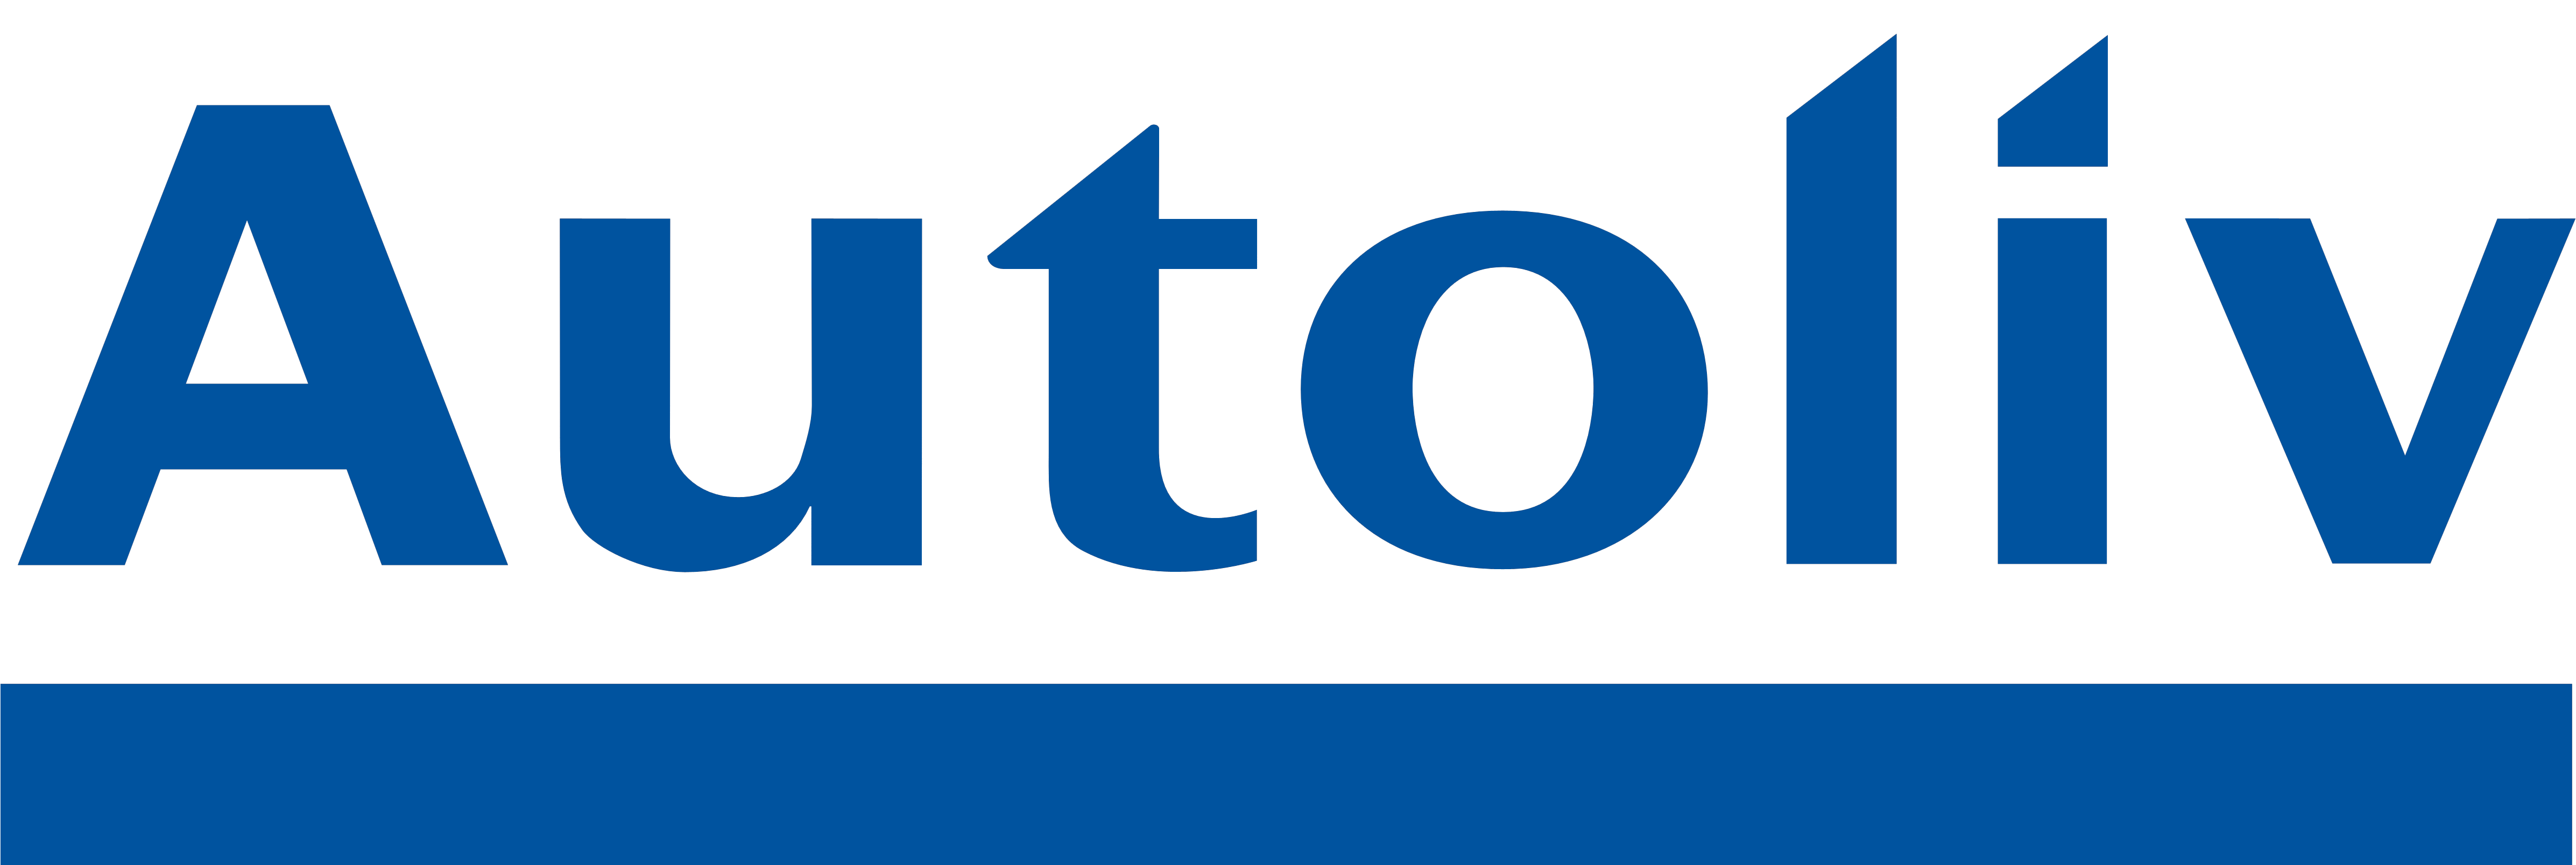 Autoliv – Logos Download